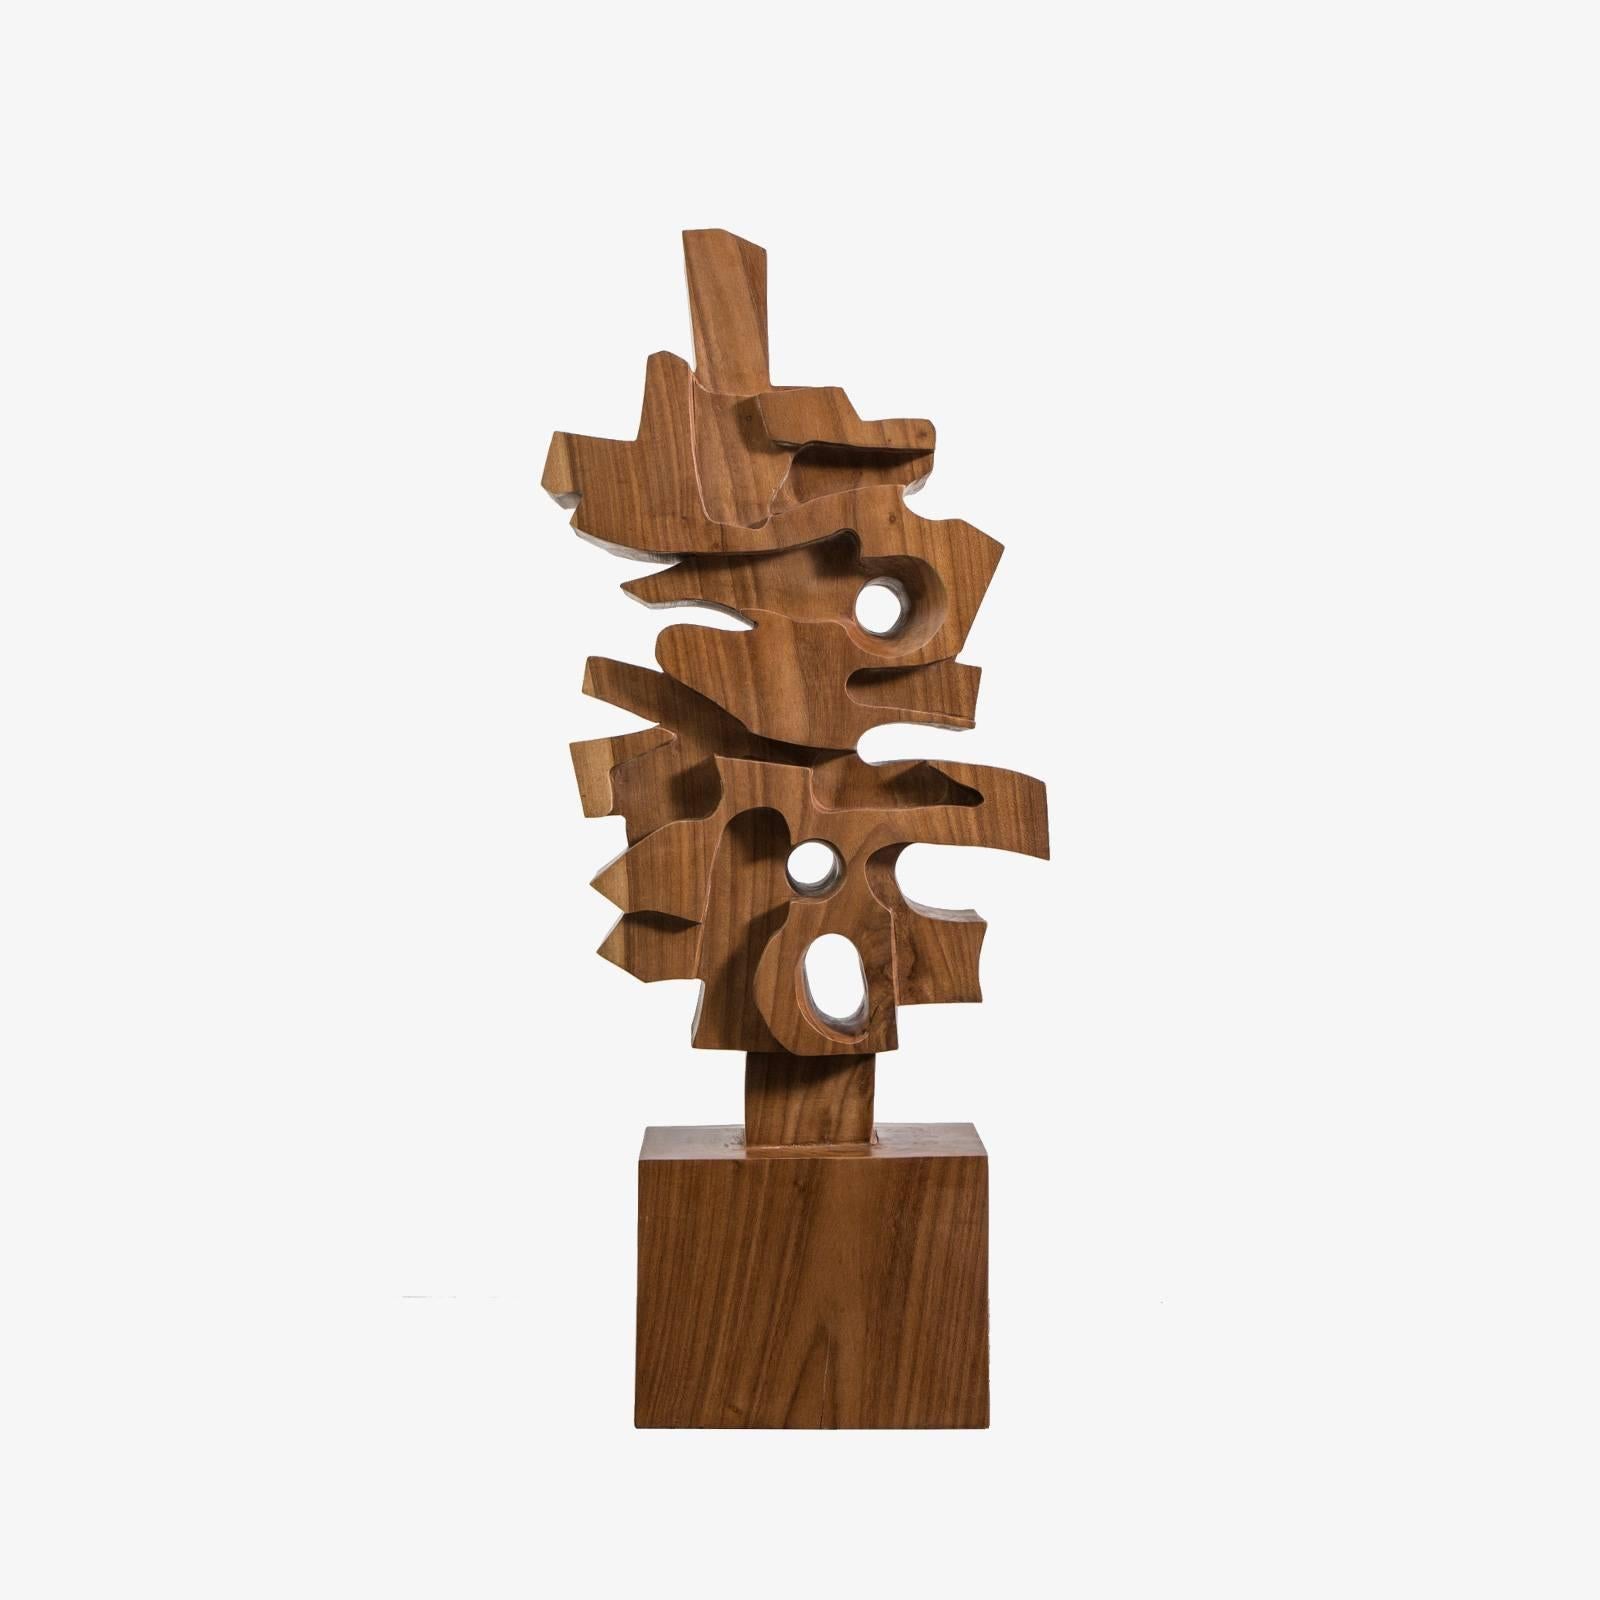 Hand-carved, tropical laurel wood sculpture by contemporary designer, Gabriela Valenzuela-Hirsch.